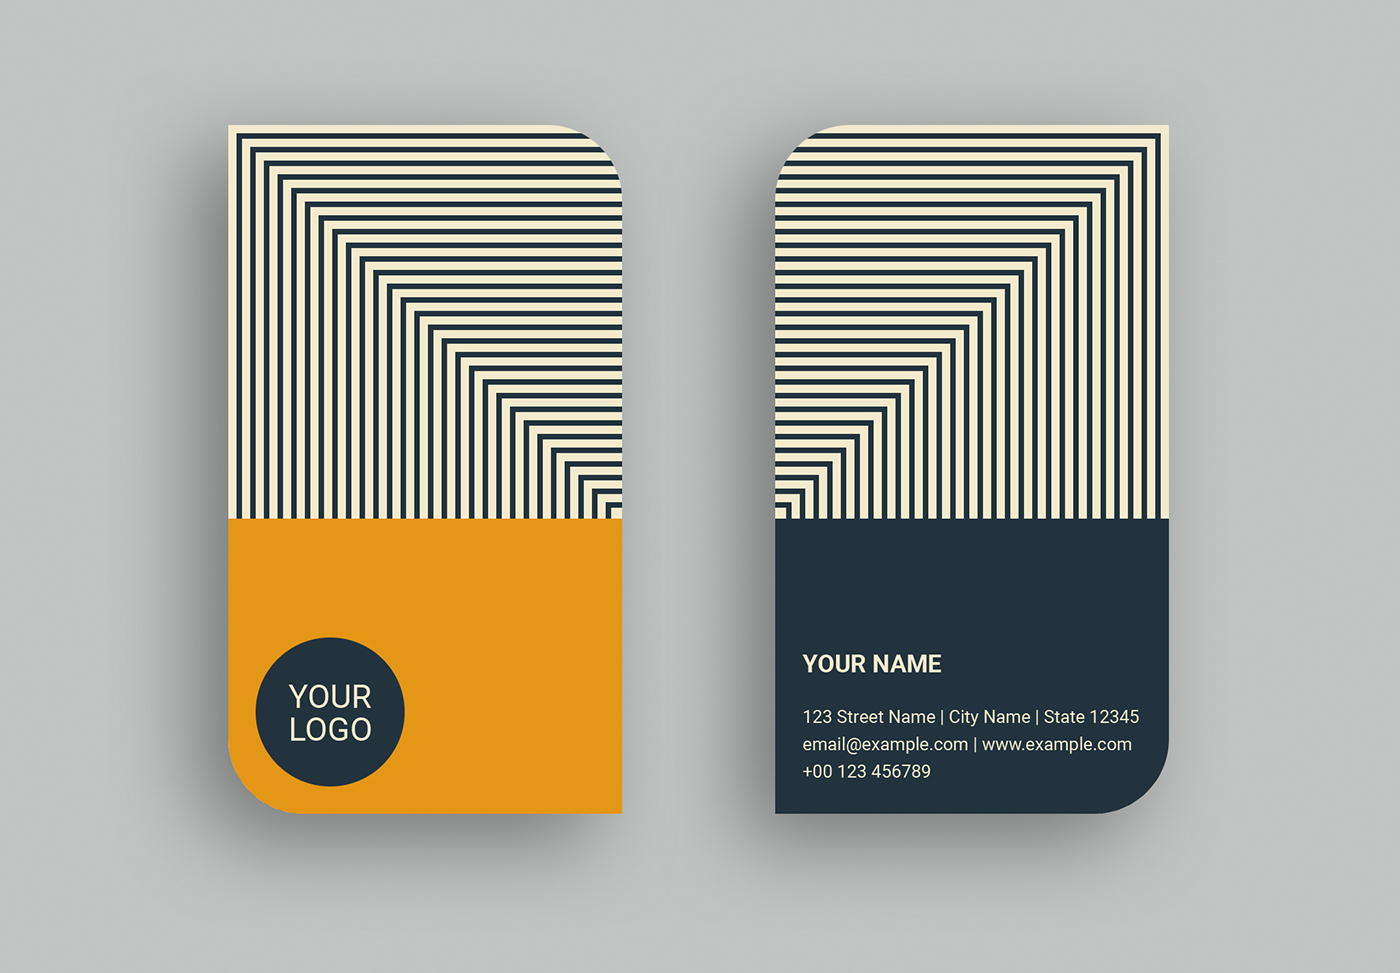 templates adobe stock print mockups design layouts Invitation cards Proposal flyer